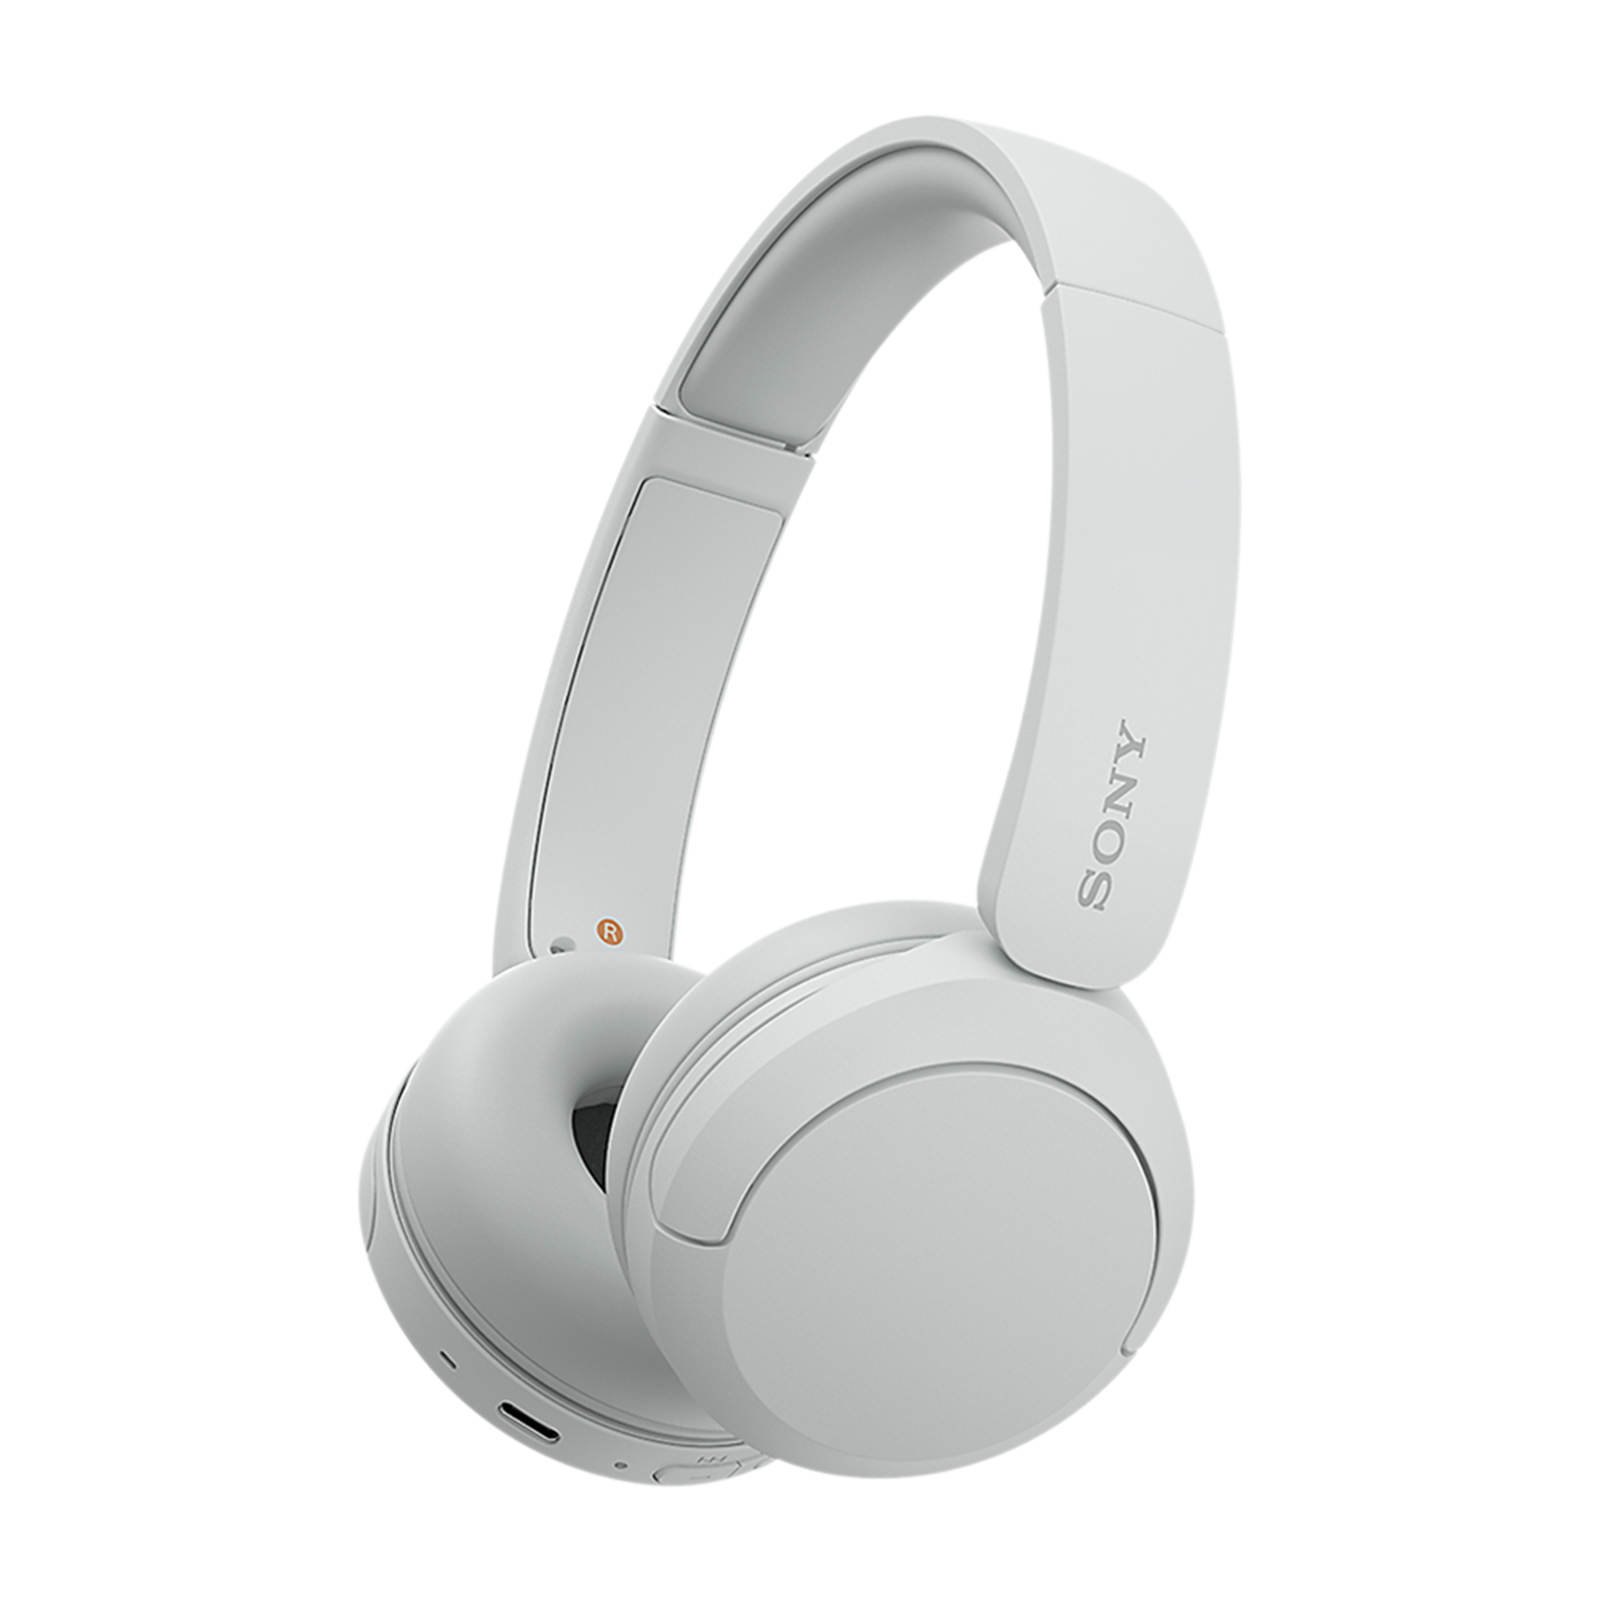 Buy Usb Headphones Online at Best Prices | Croma